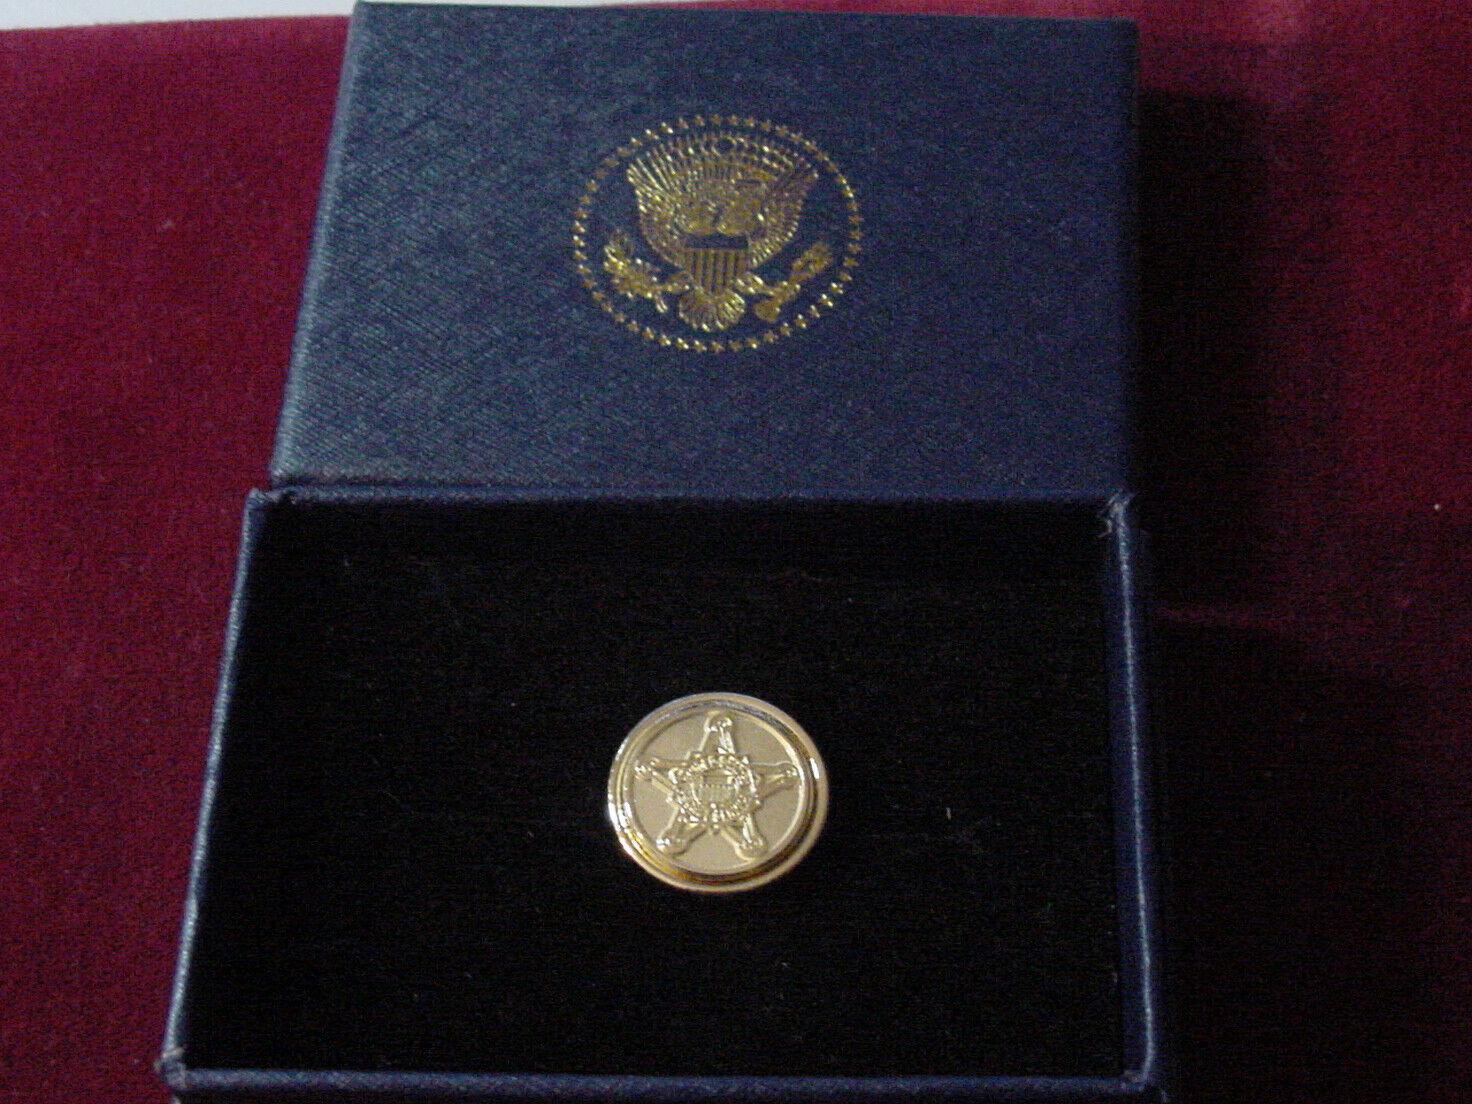 Presidential secret service lapel pin 